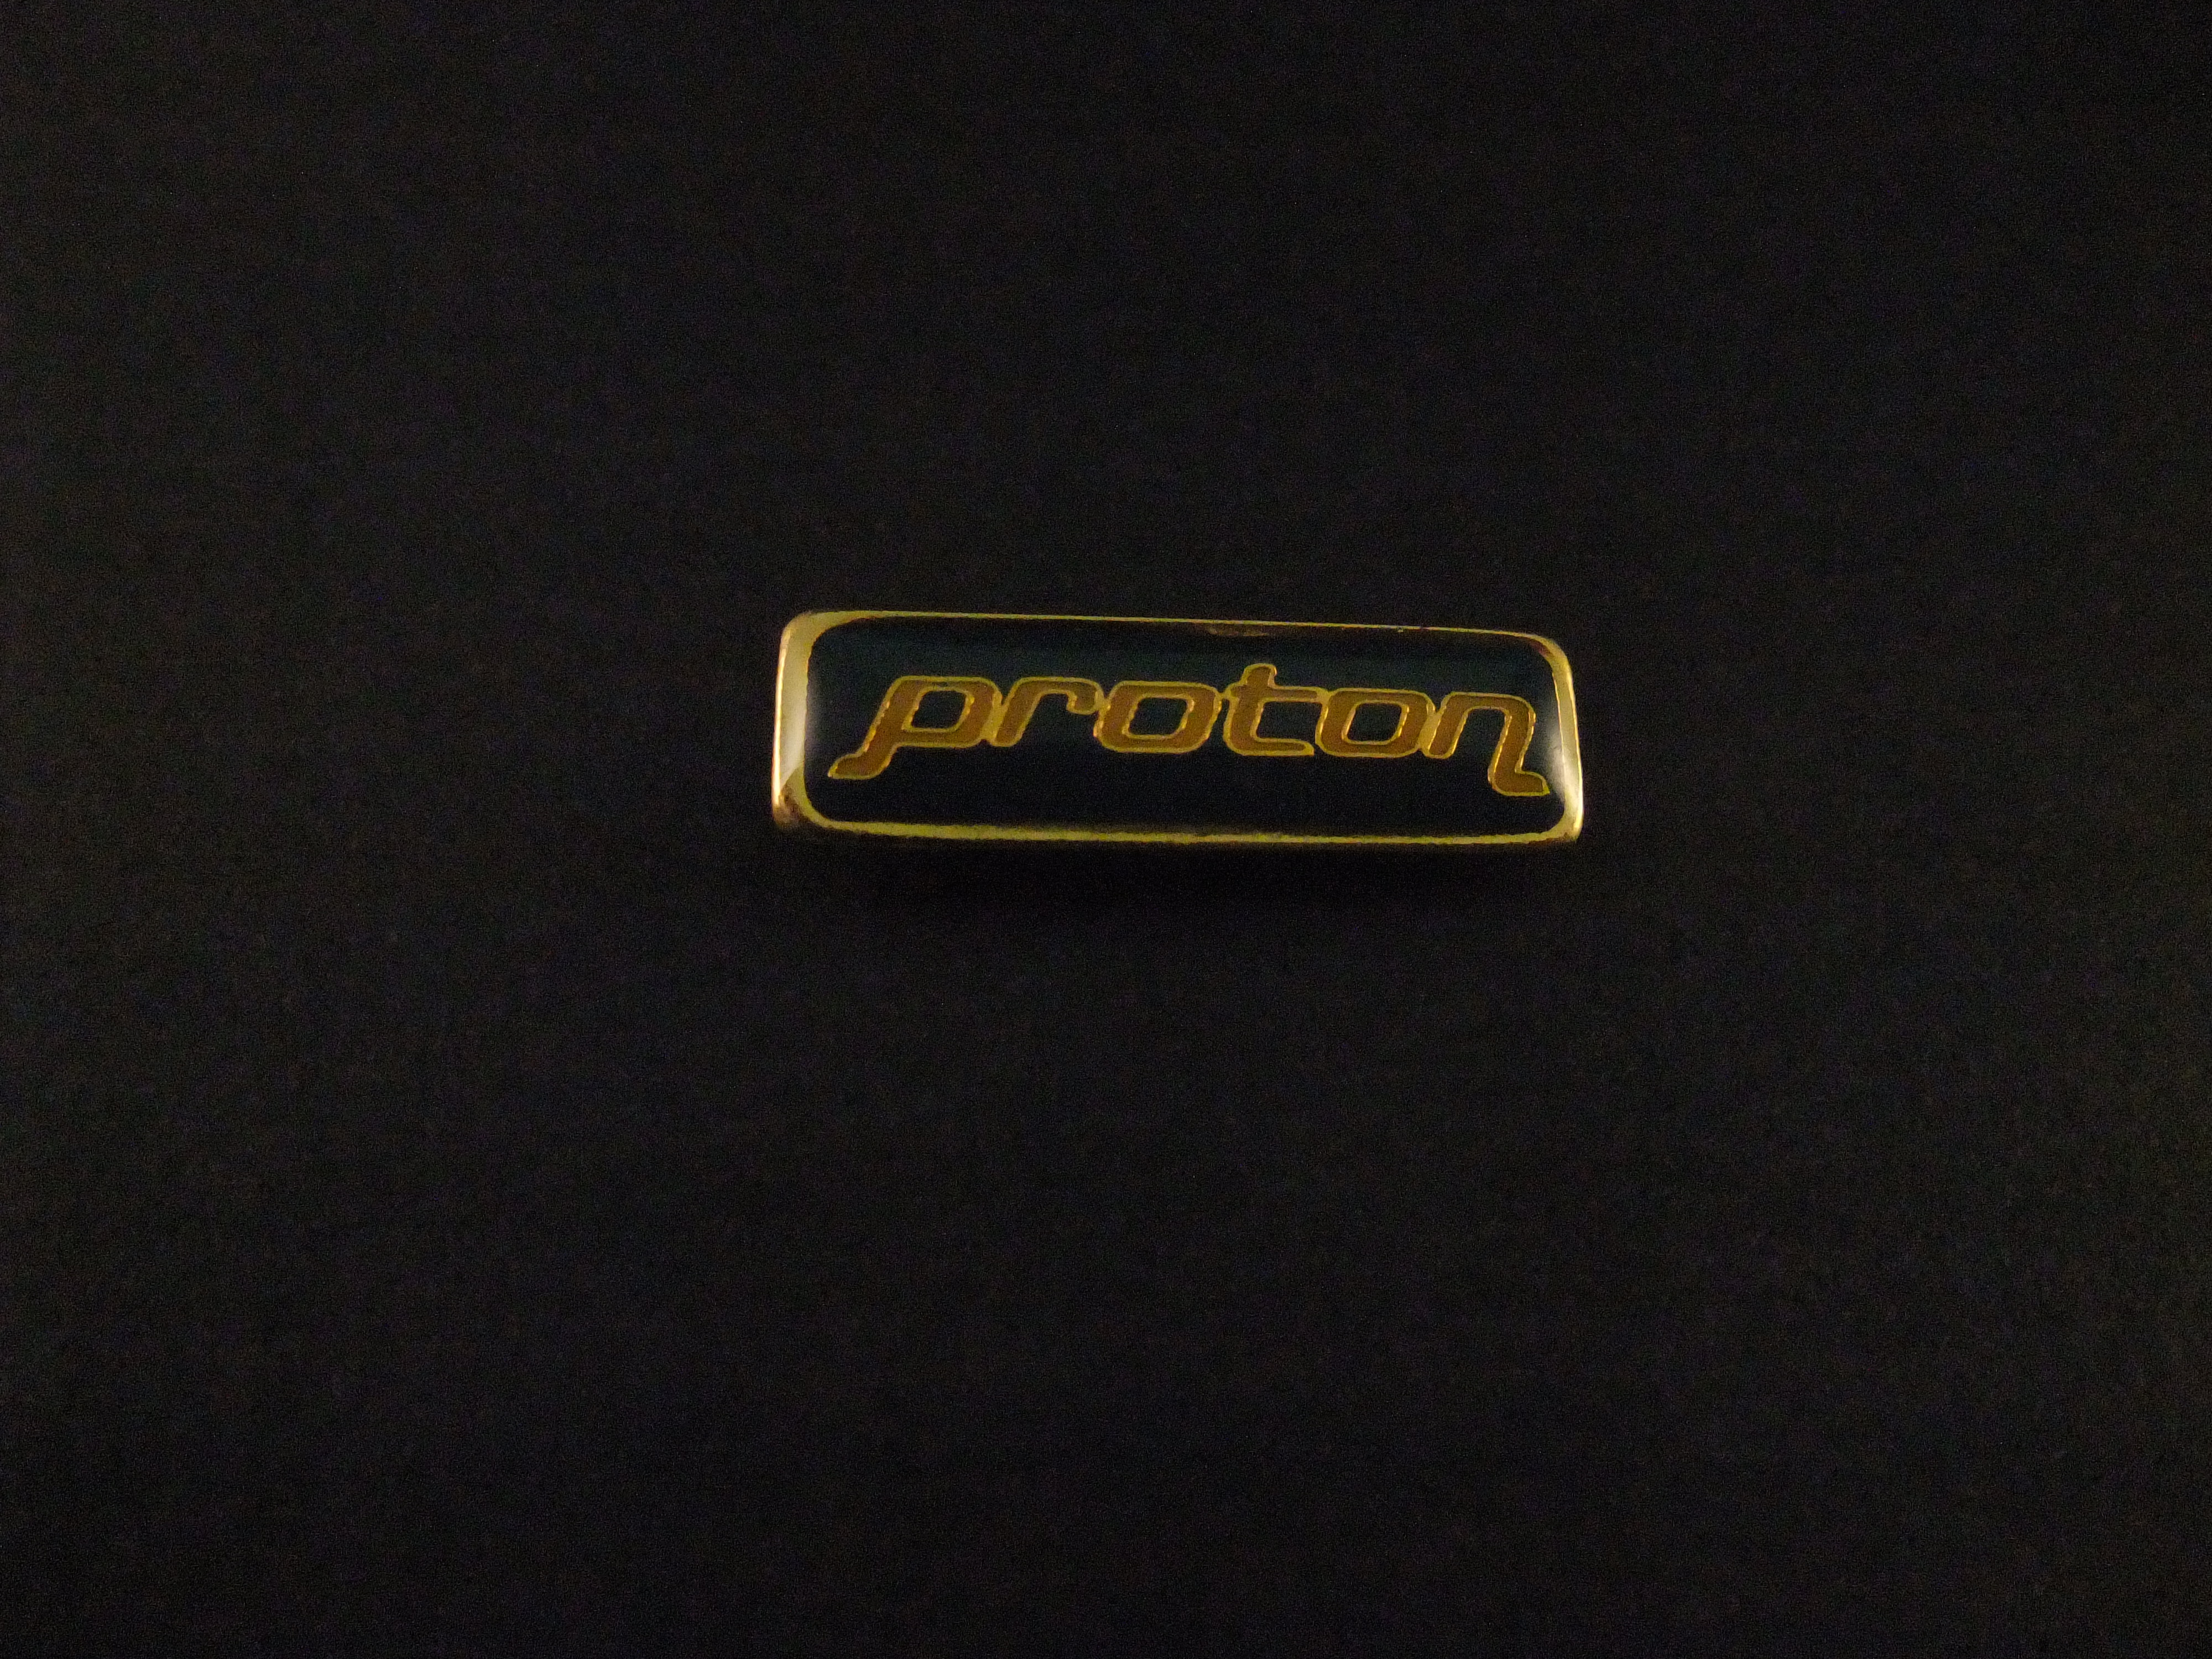 Proton Maleisische autofabrikant logo ( gele letters)